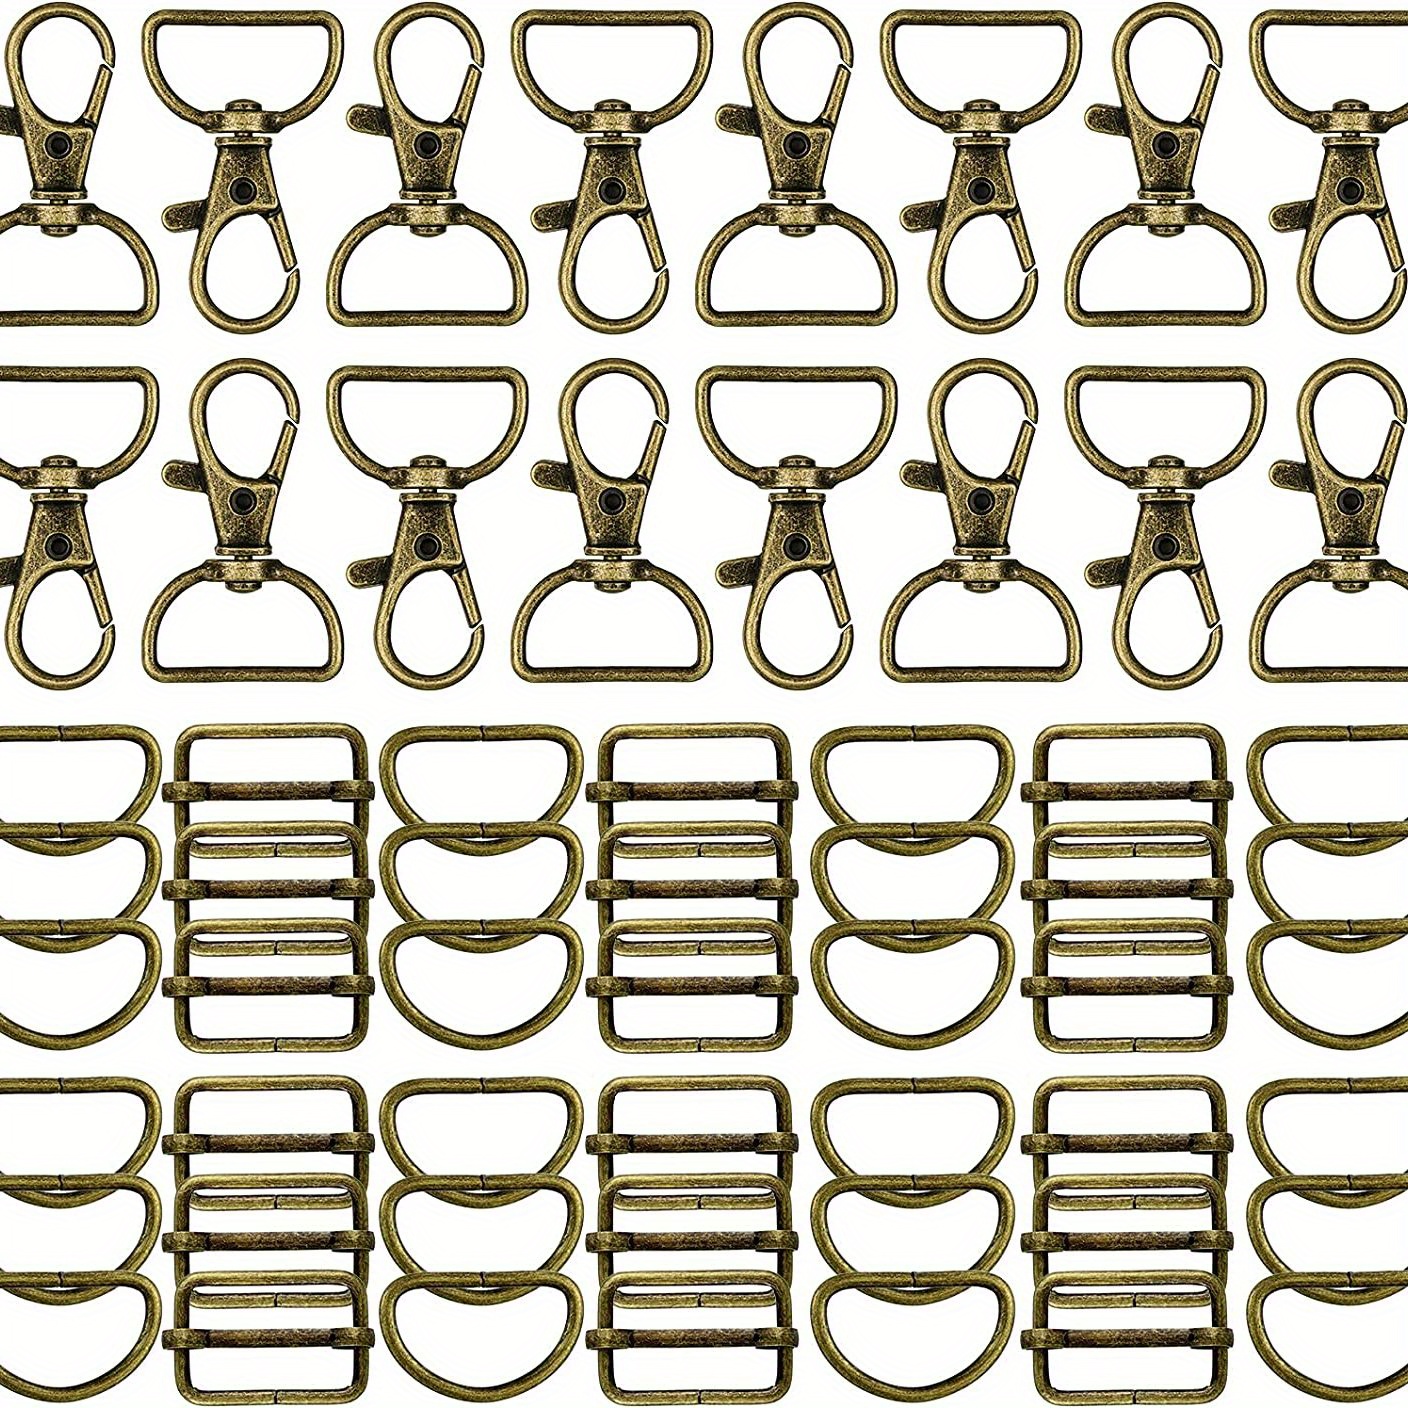  SUNNYCLUE 180Pcs DIY 20 Sets Keychain Tassels Bulk  Inspirational Charms Key Chain Making Kit Faux Suede Tassel Inspiration  Charms for Jewelry Making Lobster Claw Clasps Large Split Key Ring Supplies